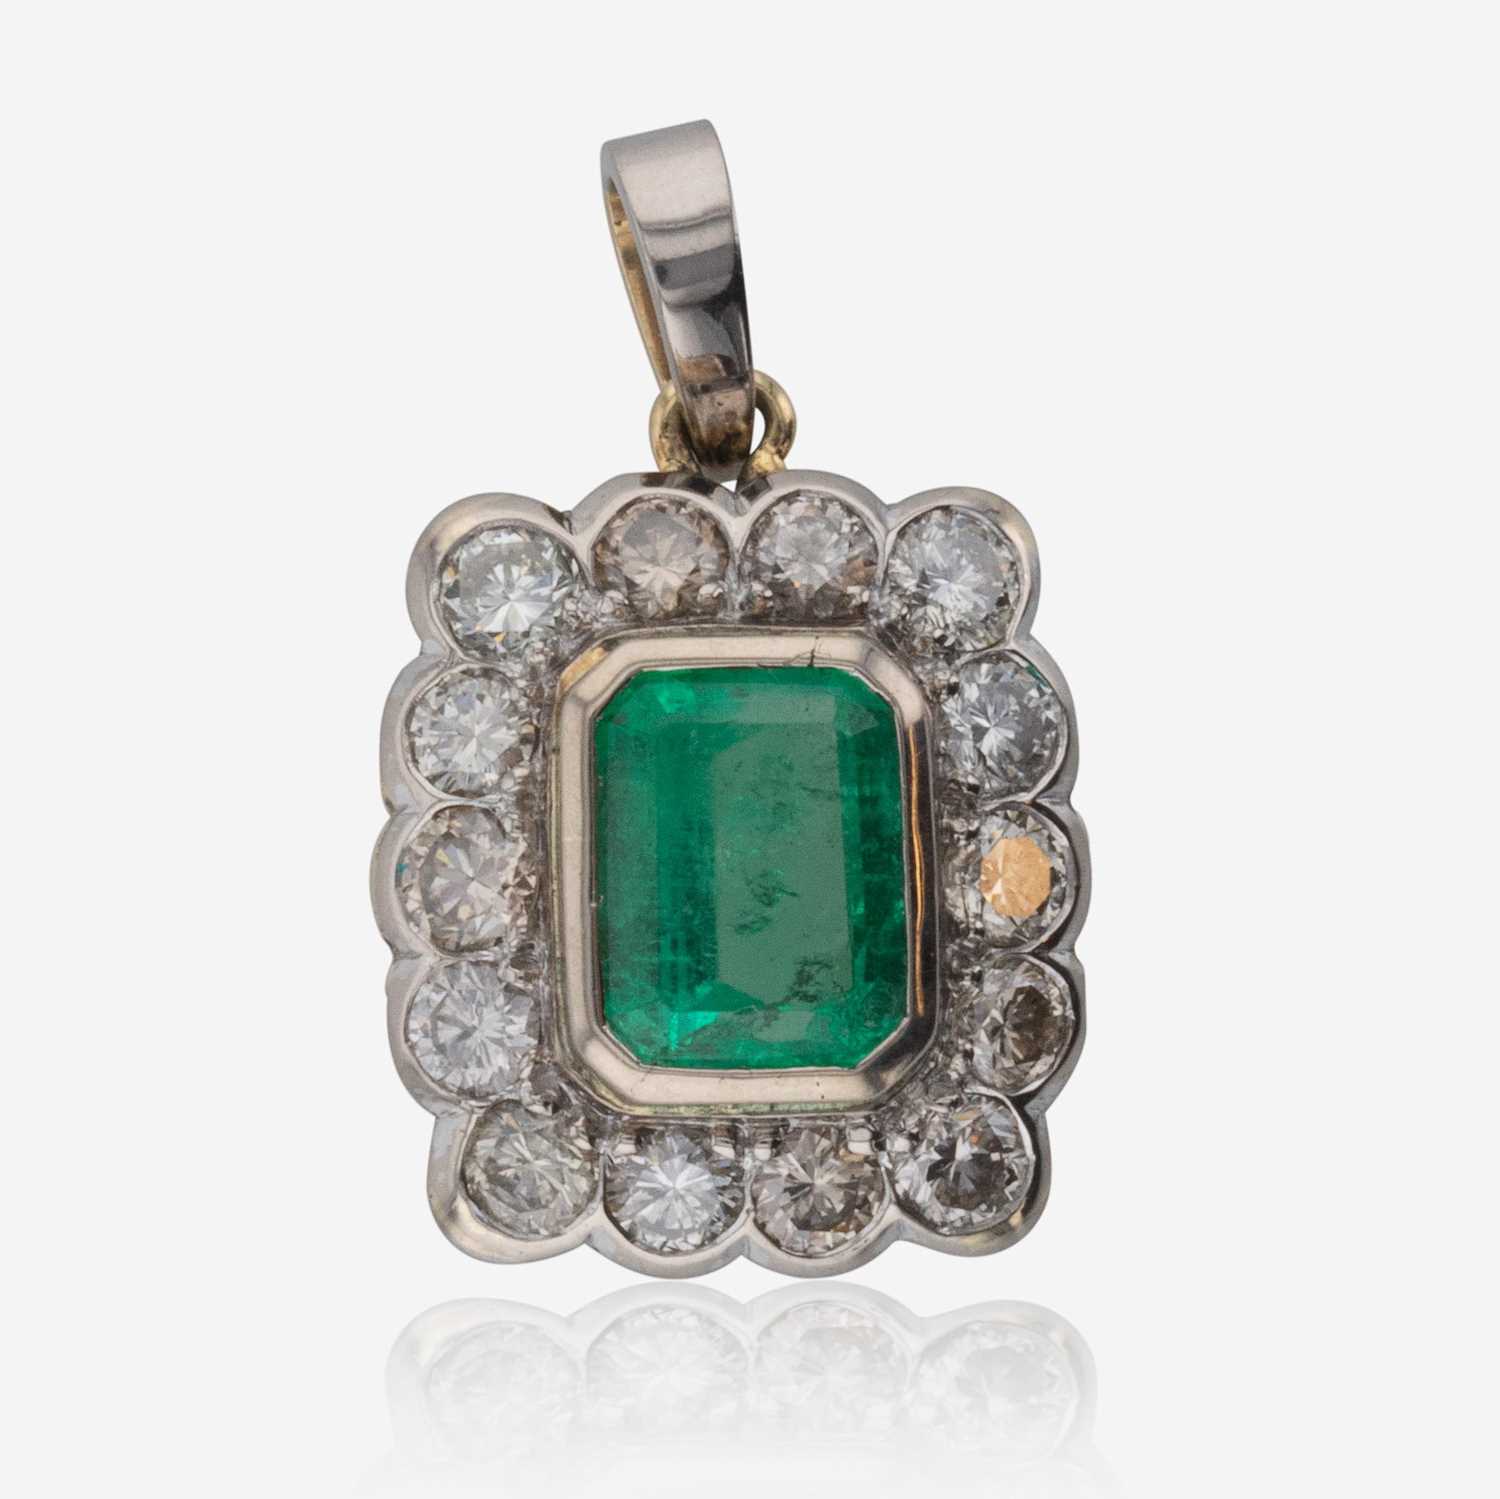 Lot 286 - An Emerald, Diamond, and 18K Gold Pendant